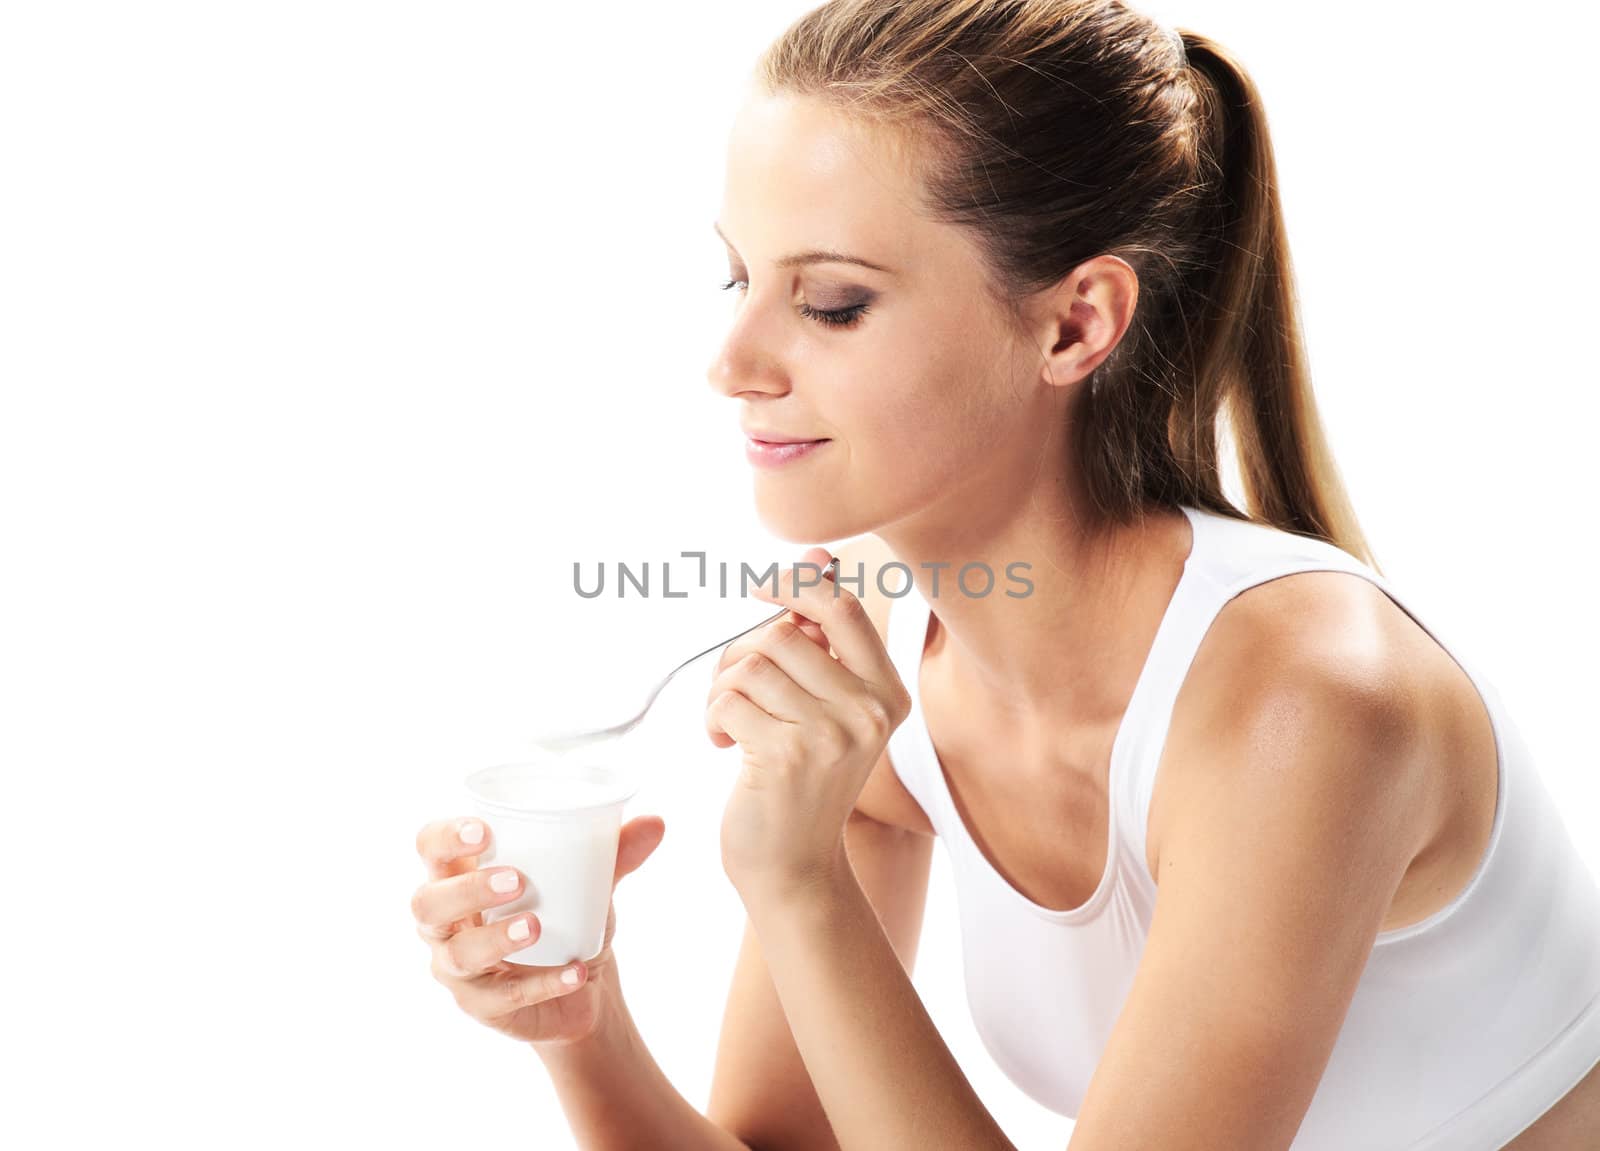 Young woman eating yogurt as breakfast or snack